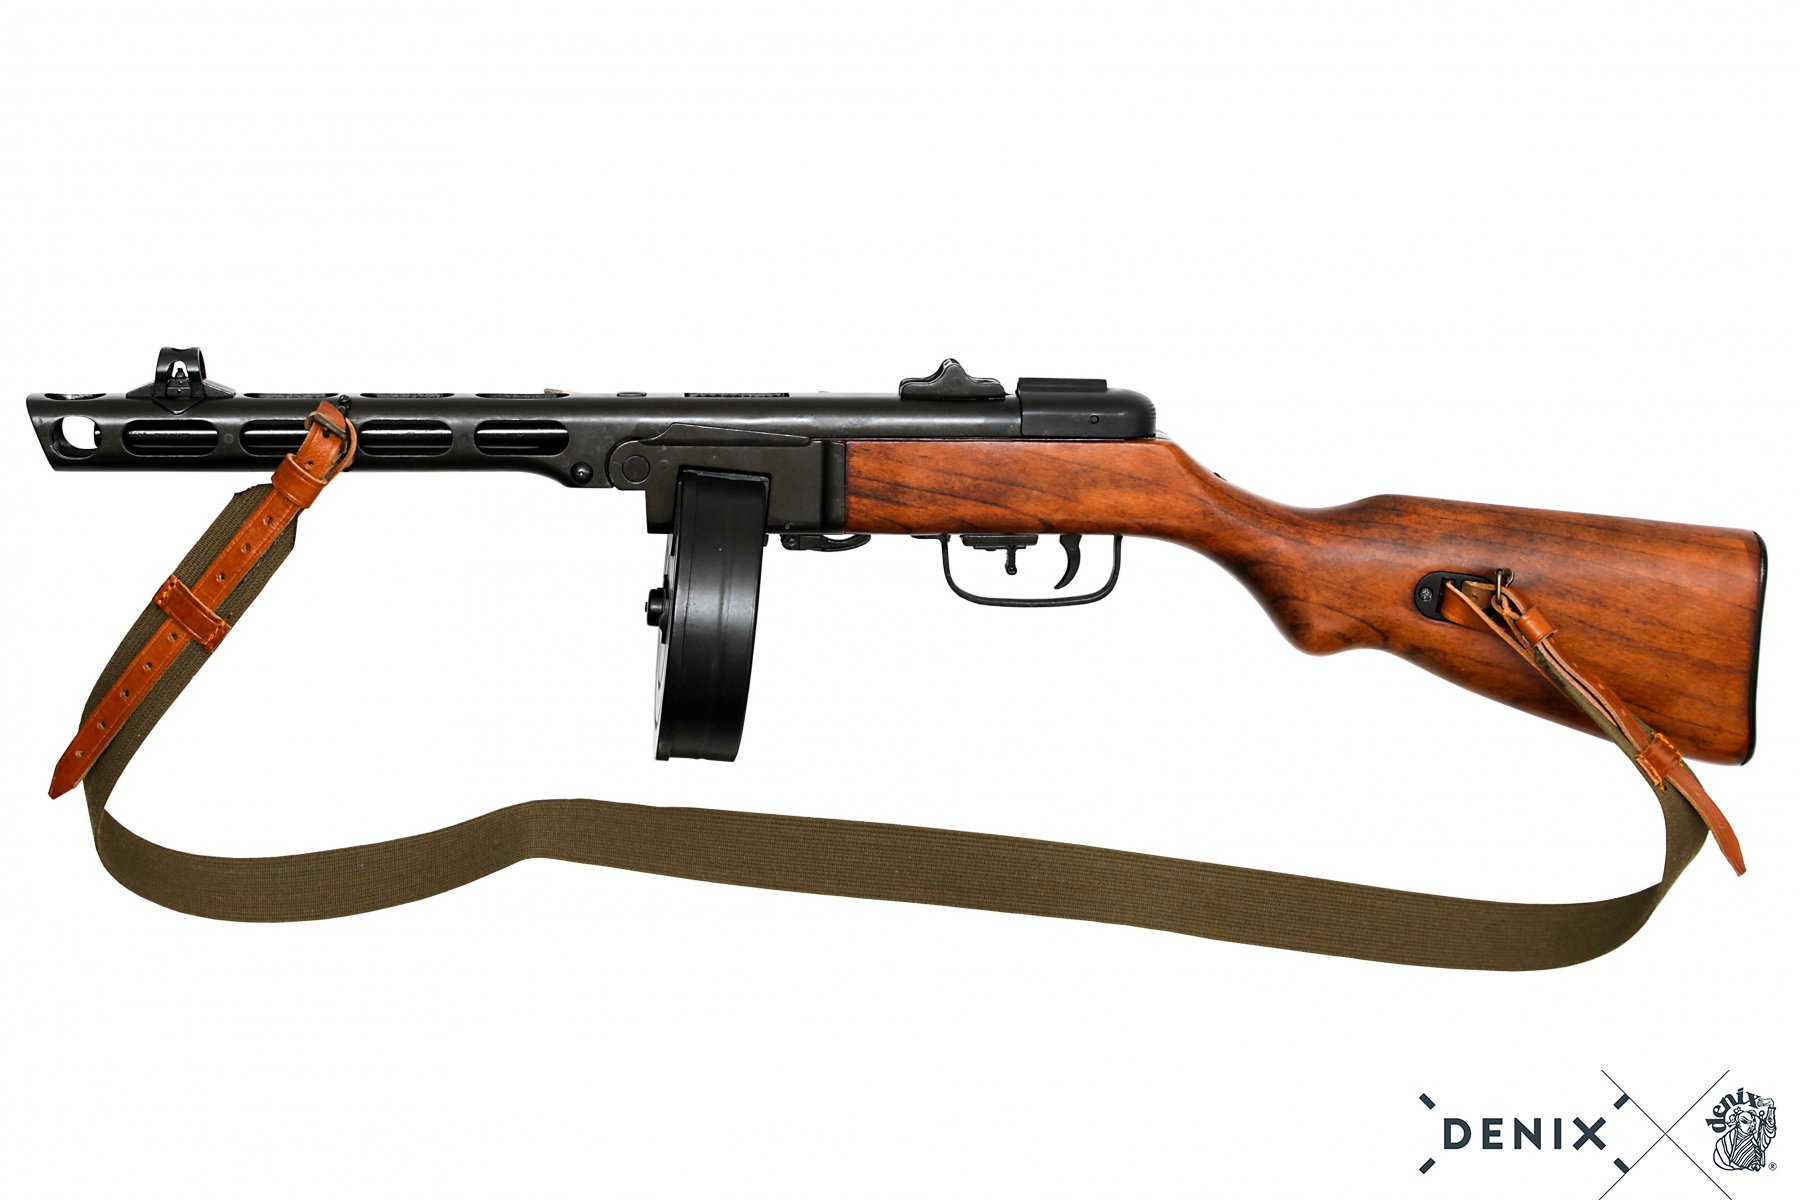 PPSH-41 SUBMACHINE GUN, SOVIET UNION 1941 - The Gun Store - CY